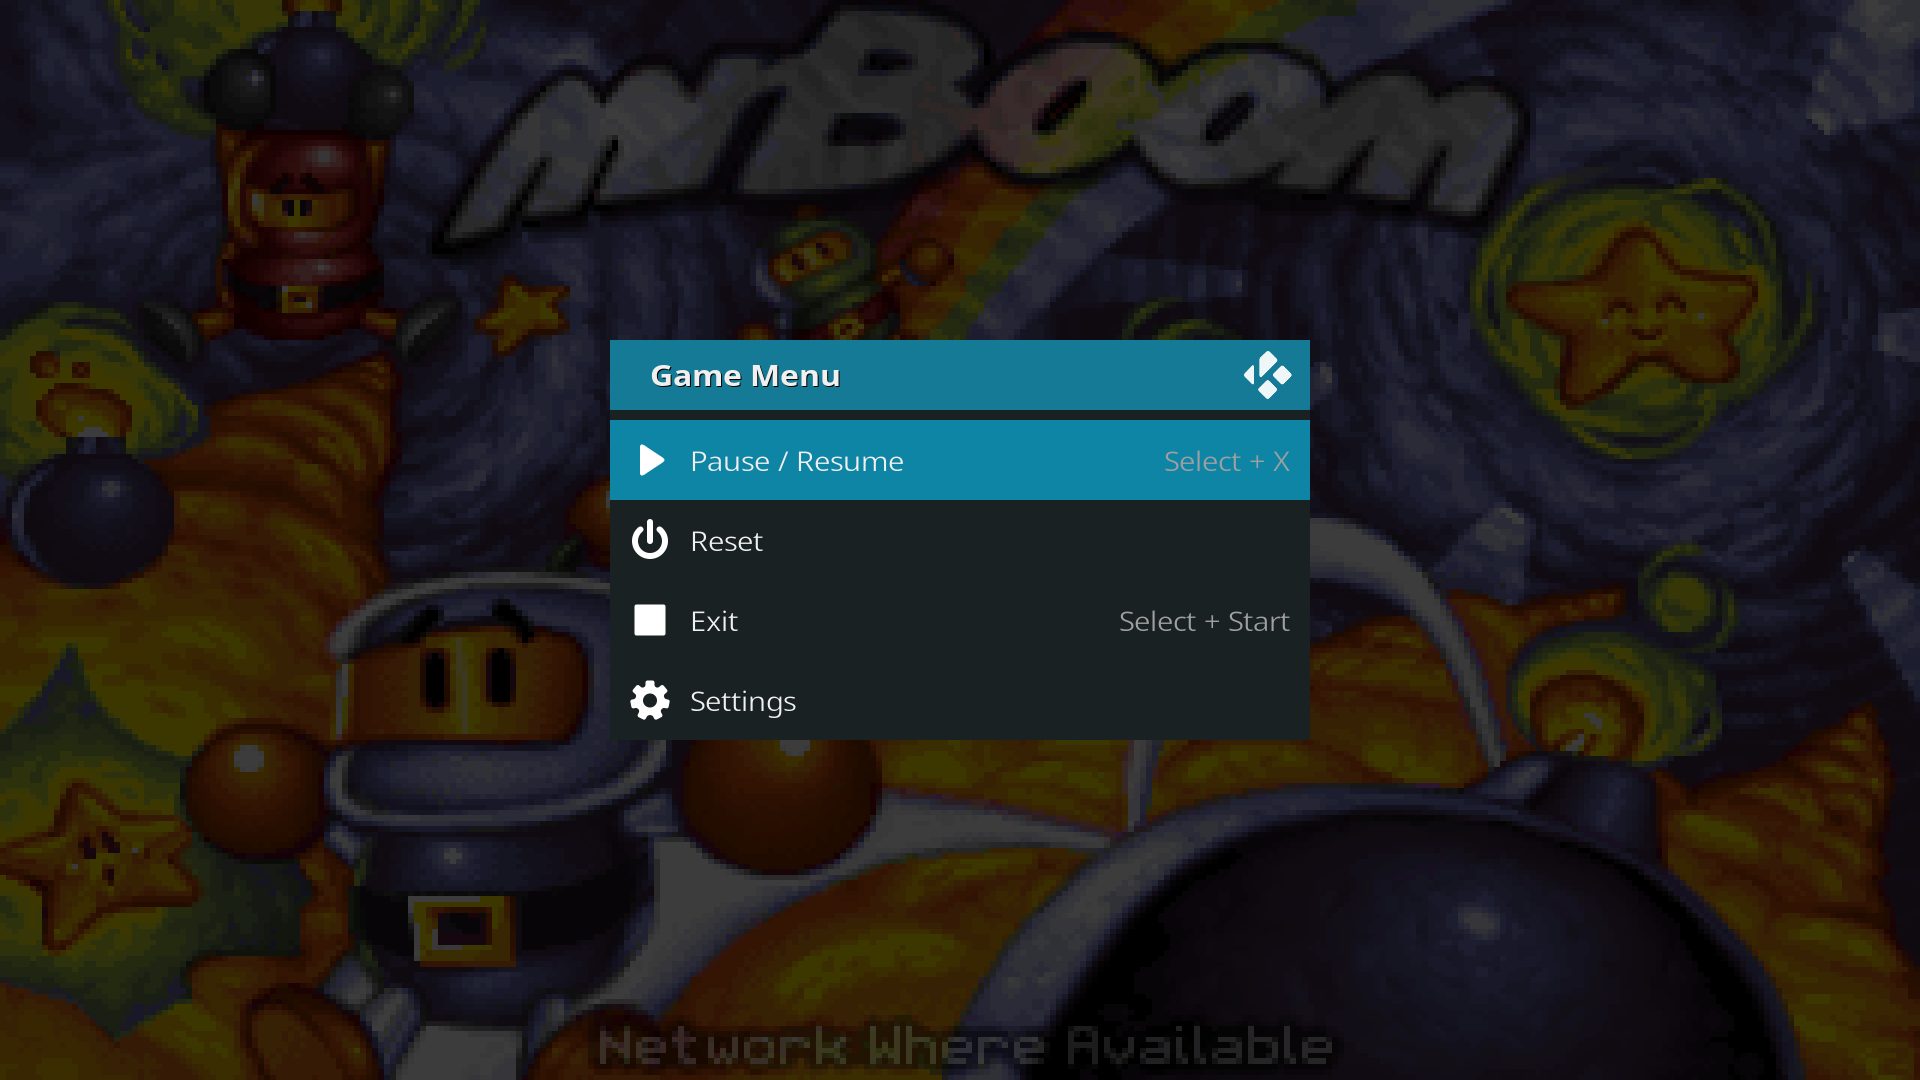 The in-game menu